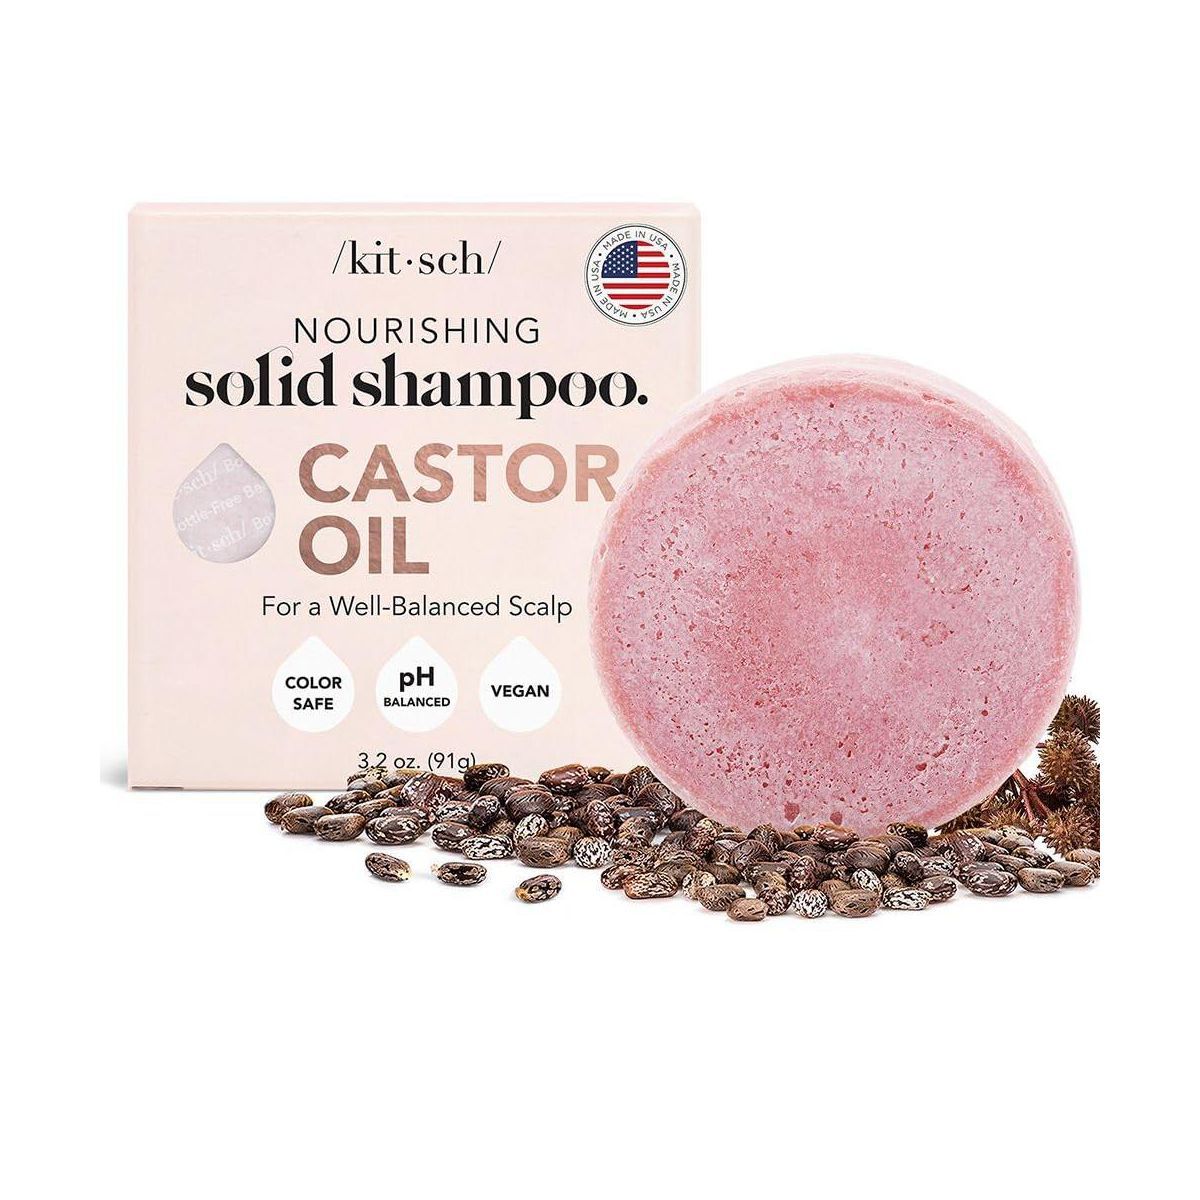 Kitsch Castor Oil Nourishing Shampoo Bar | Target